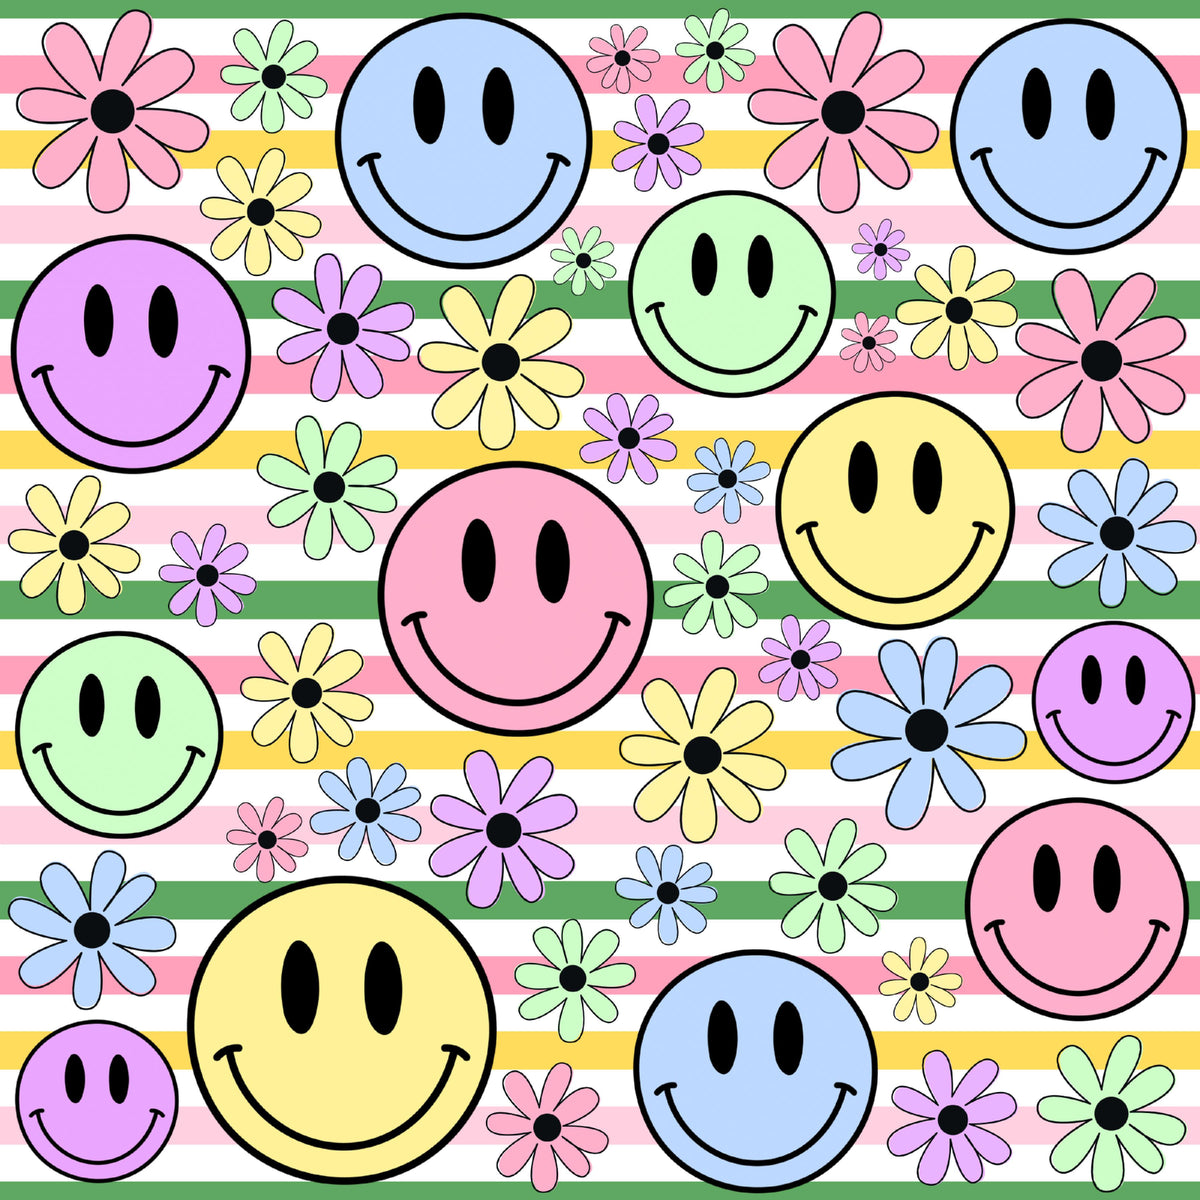 Preppy Smile Face Png Distressed Smile Face PDF Pink Smile 